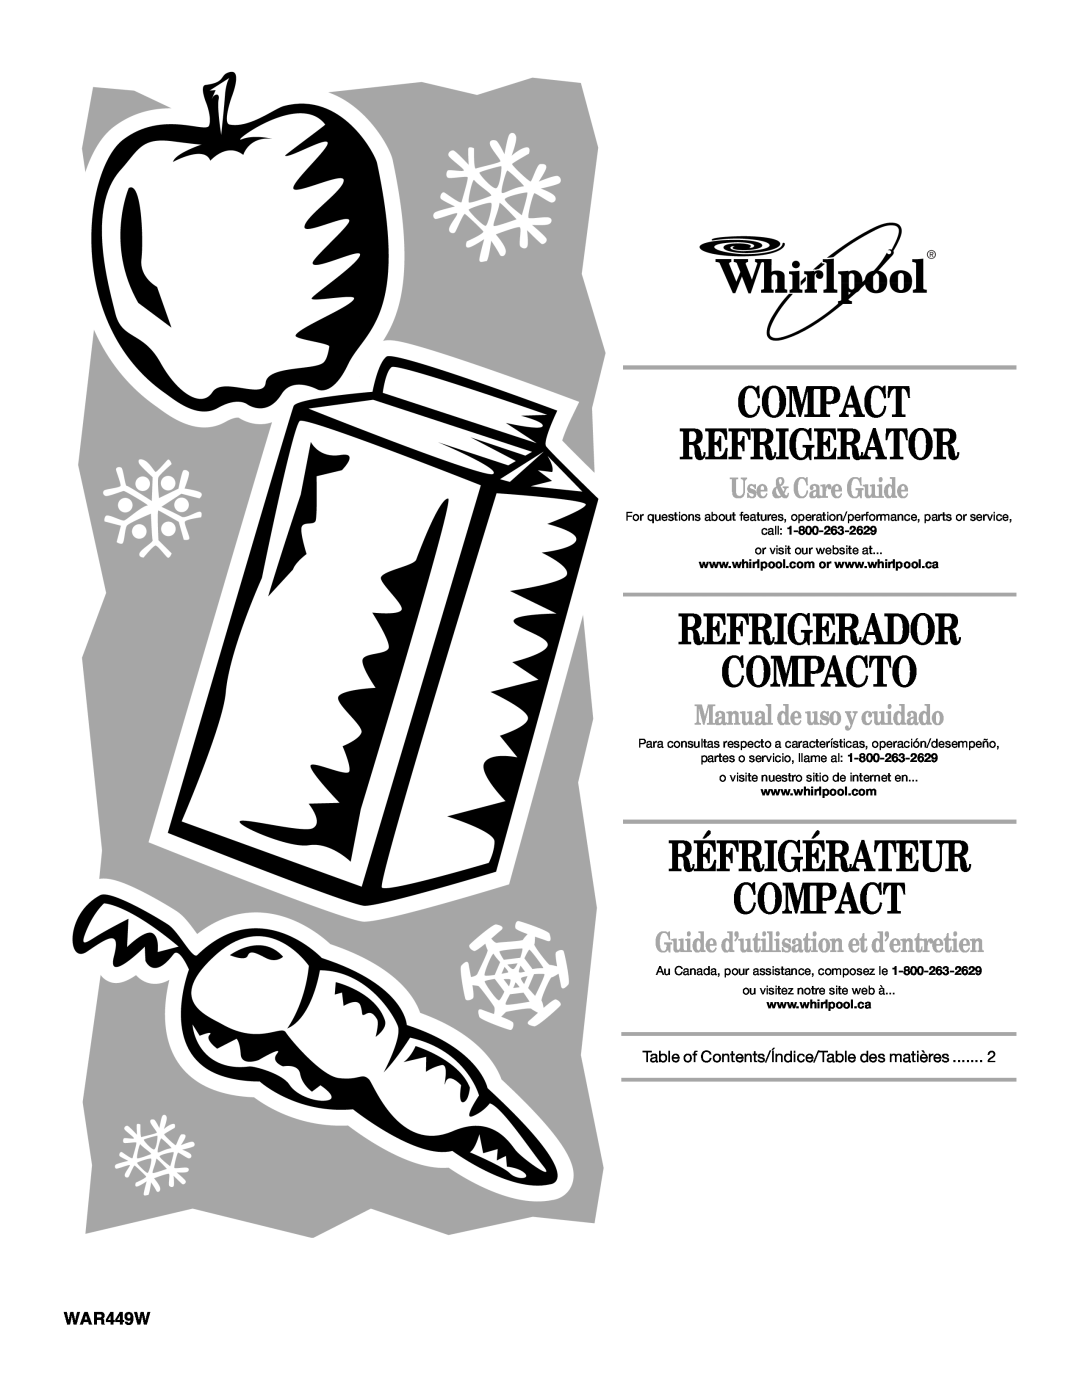 Whirlpool WAR449W manual Compact Refrigerator, Refrigerador Compacto, Réfrigérateur Compact, Use & Care Guide 